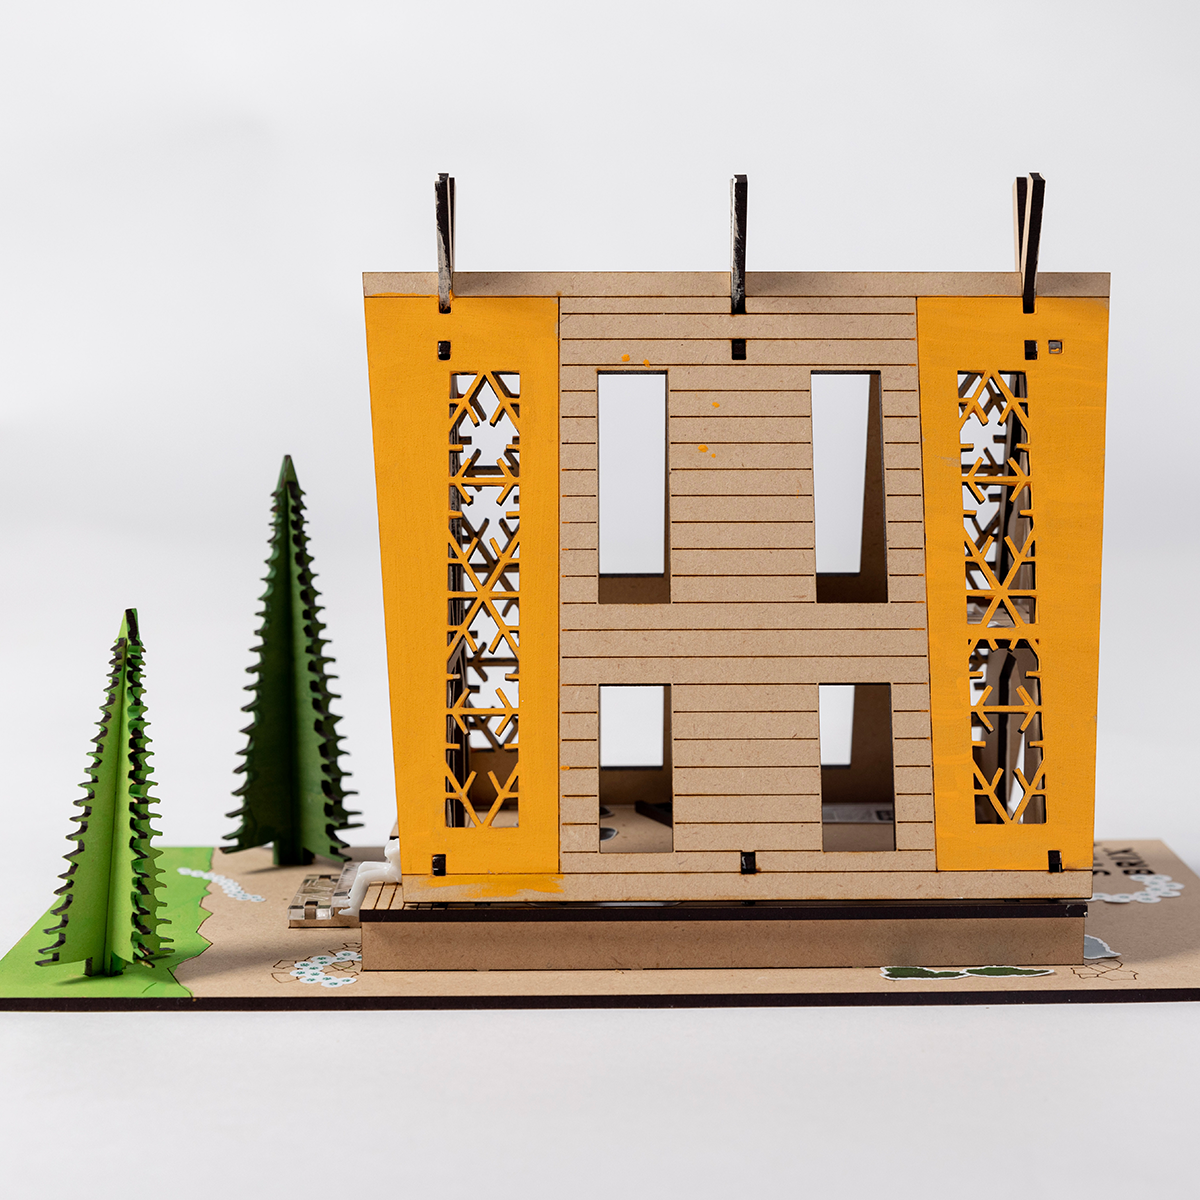 Evergreen Cabin Architectural Model Building Kit